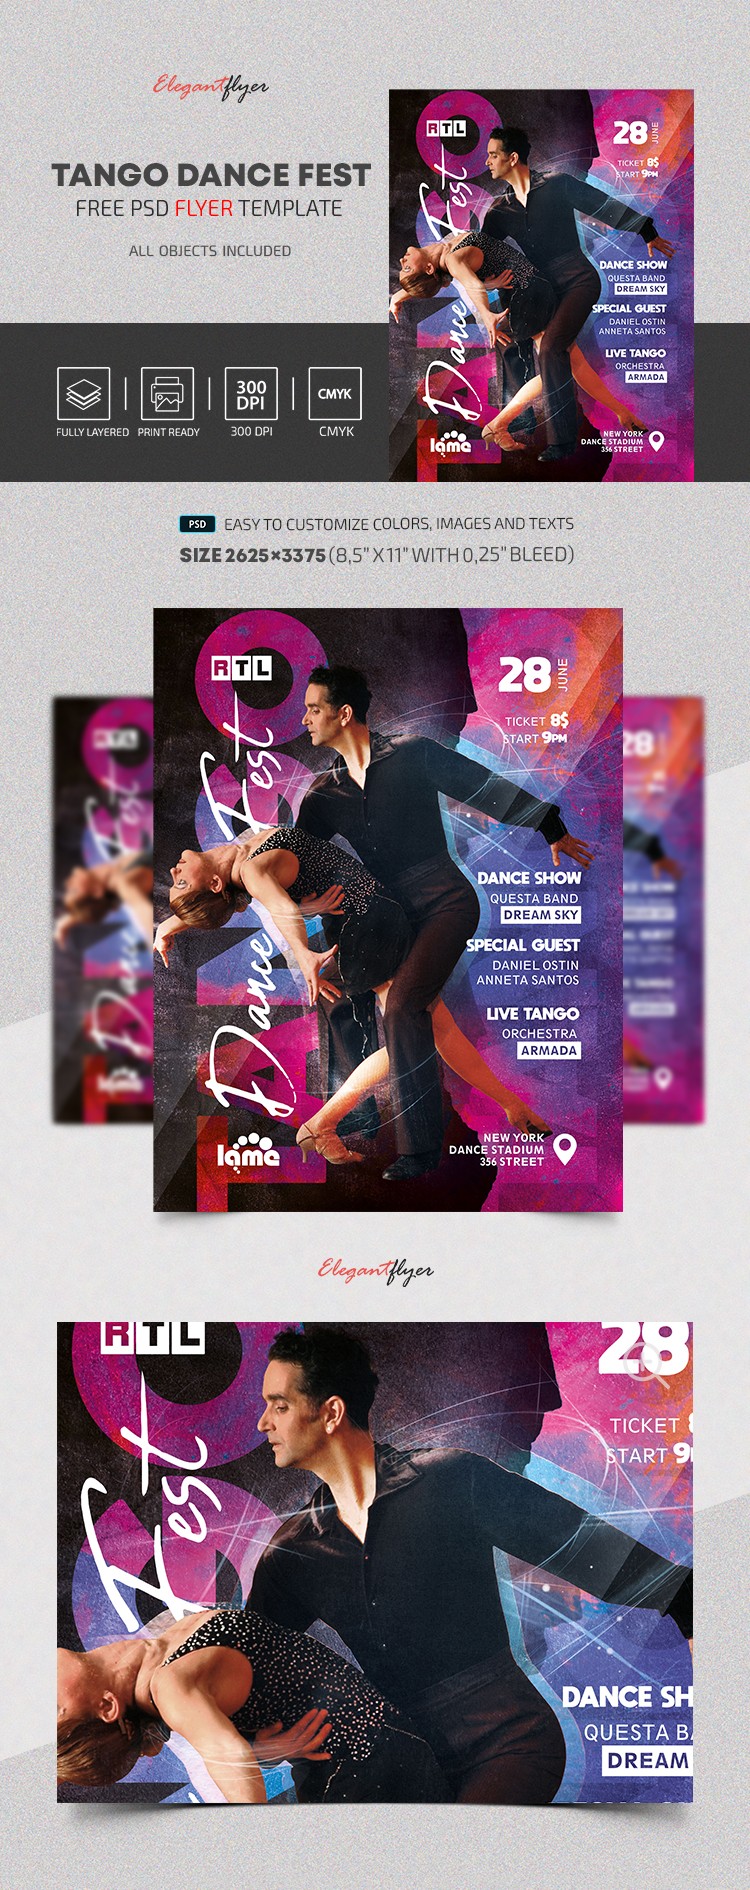 Tango Dance Fest Flyer by ElegantFlyer